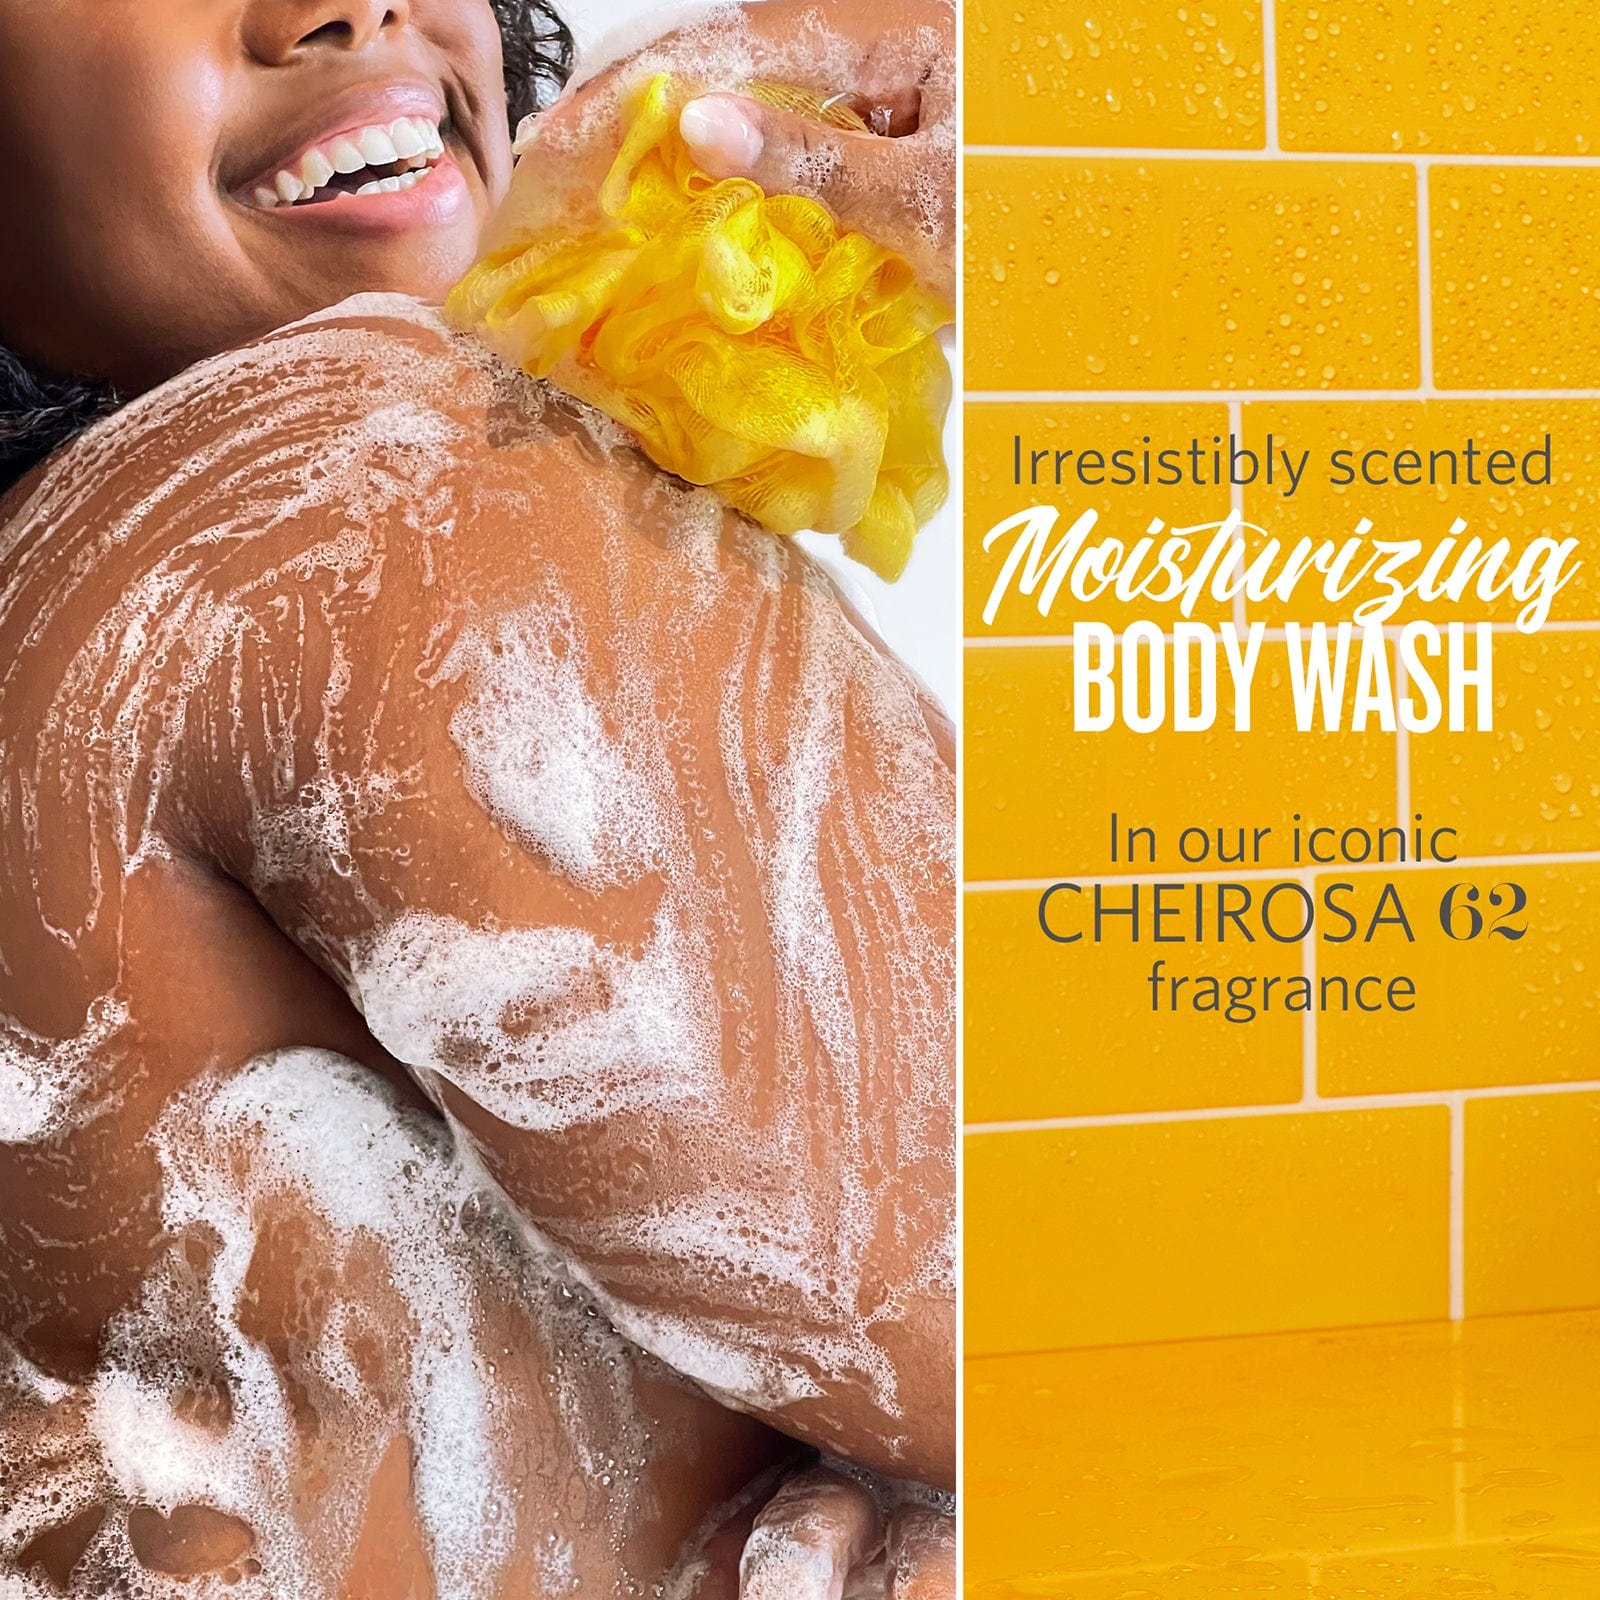 irresistibly scented moisturizing body wash | In our iconic Cheirosa 62 fragrance | Brazilian 4 Play Moisturizing Shower Cream-Gel 1 liter | Sol de janeiro